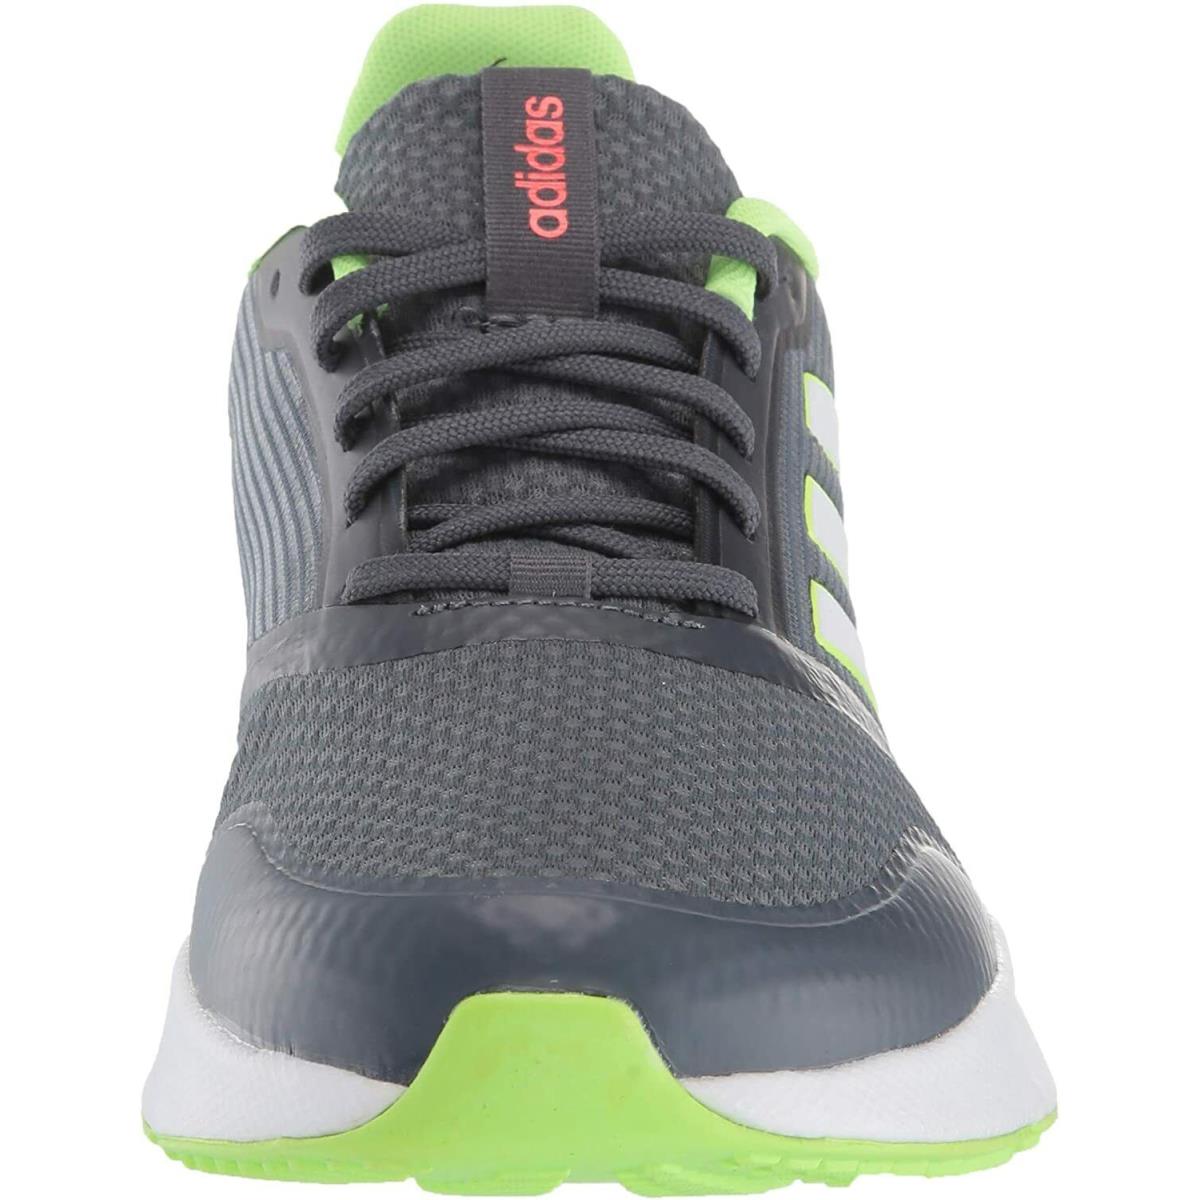 Adidas shoes PureBoost - Onix Grey/Green 1